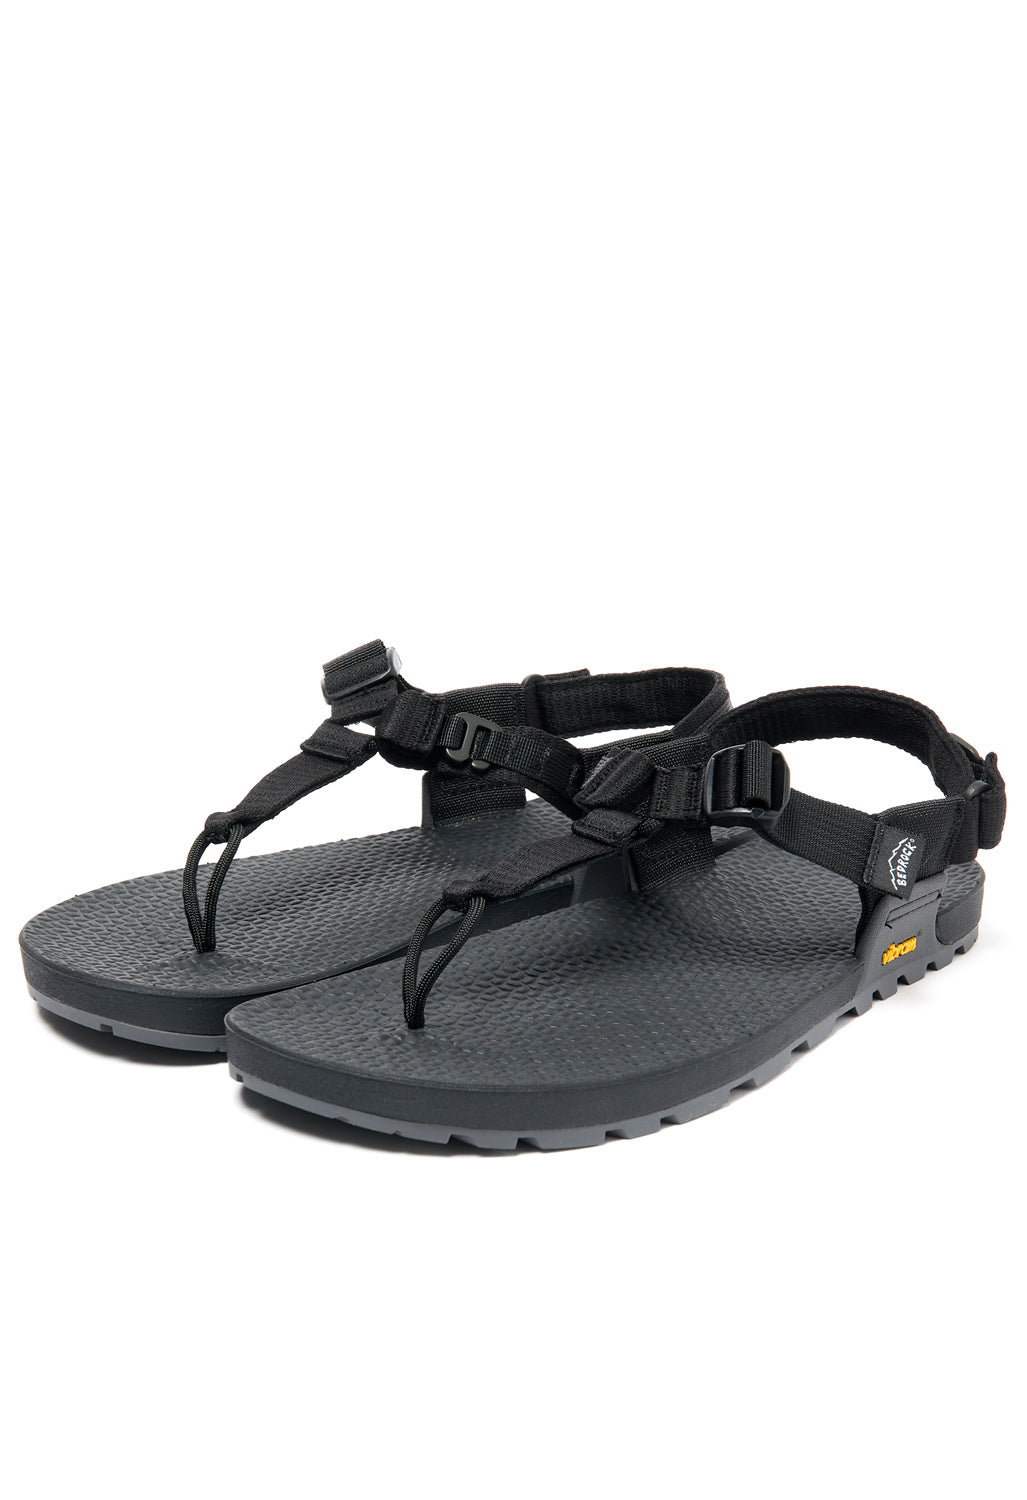 Bedrock Sandals Cairn Evo 3D Pro Sandals - Black